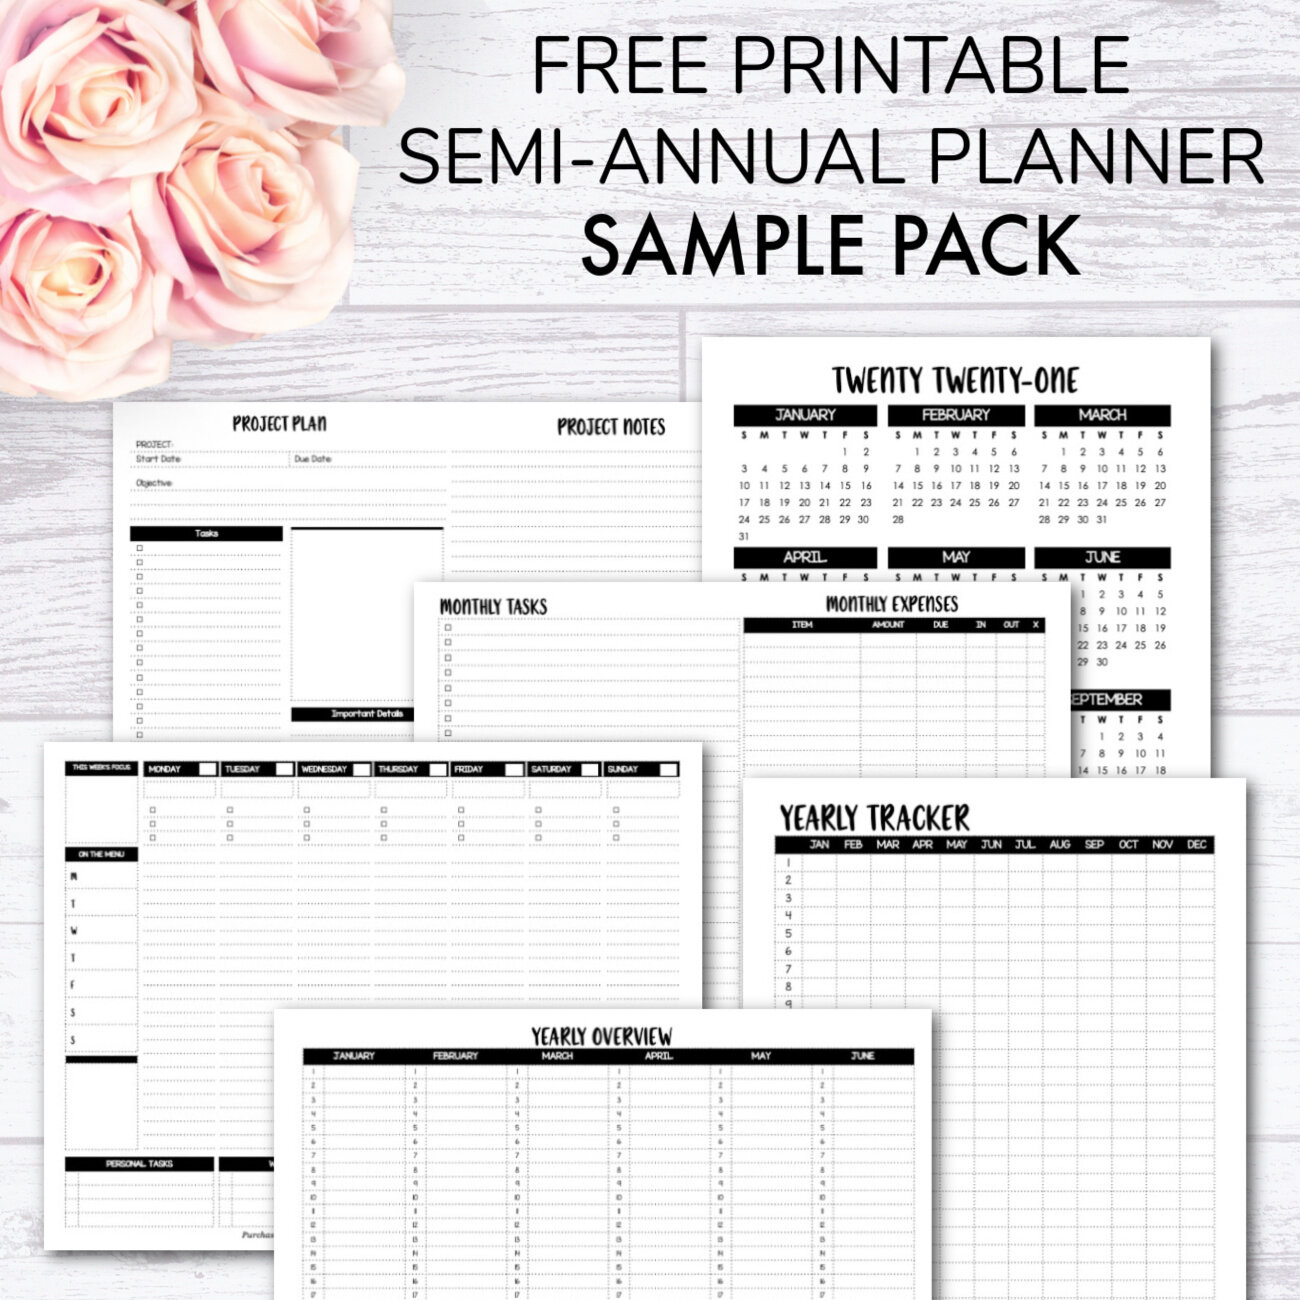 Free Printable Semi Annual Planner Sample Pack